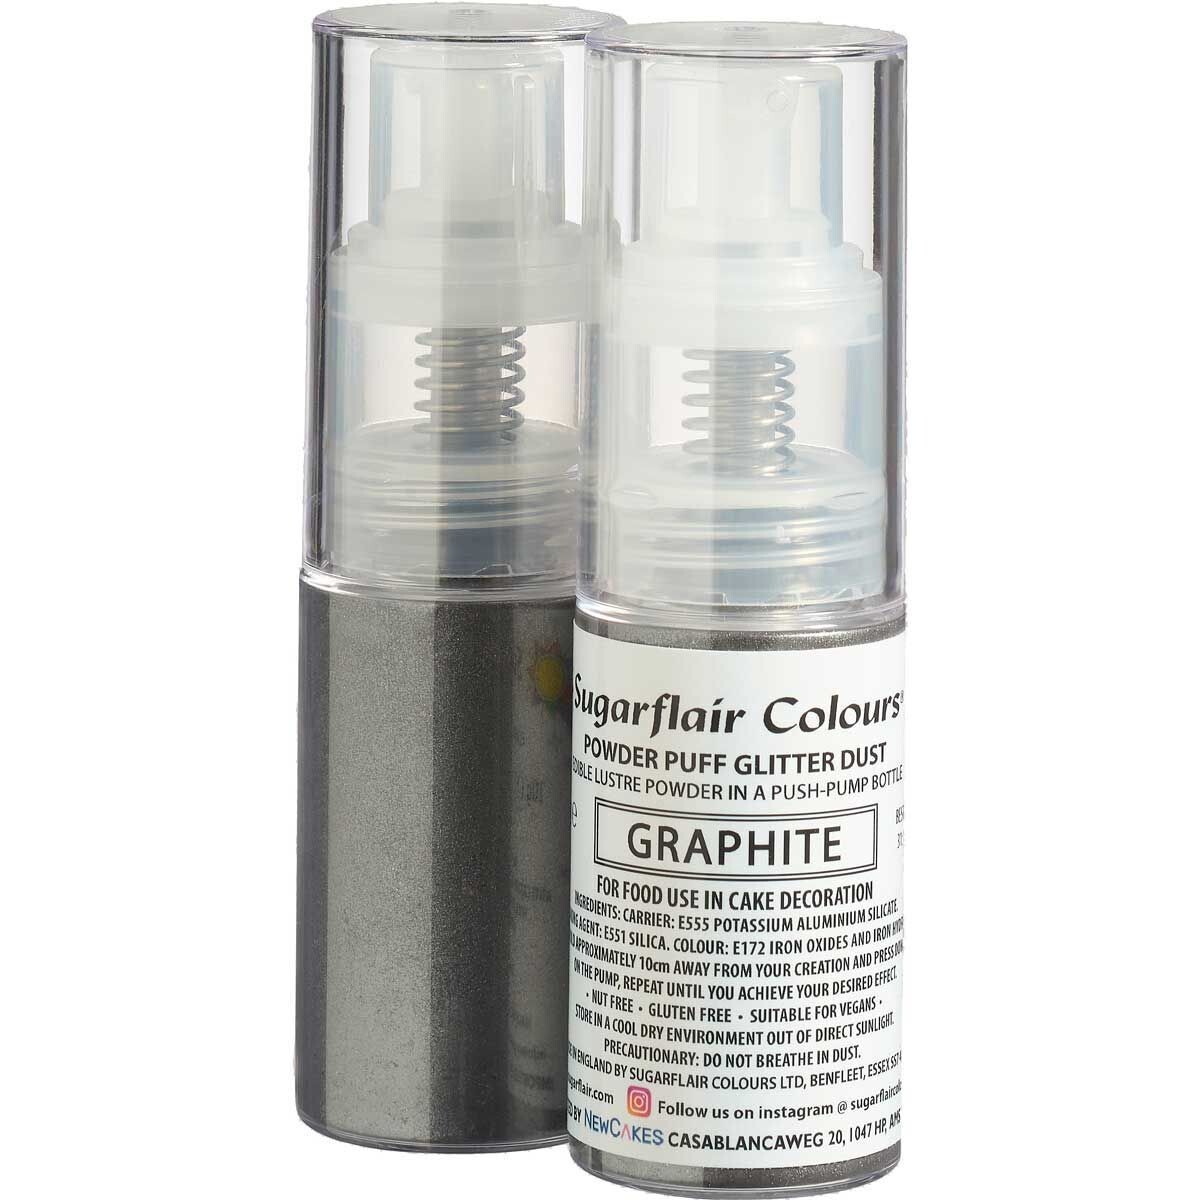 Sugarflair Powder Puff Glitter Dust Pump Spray -GRAPHITE 10g - Βρώσιμο Γκλίτερ σε σπρέι - Γραφίτης/Ασημί